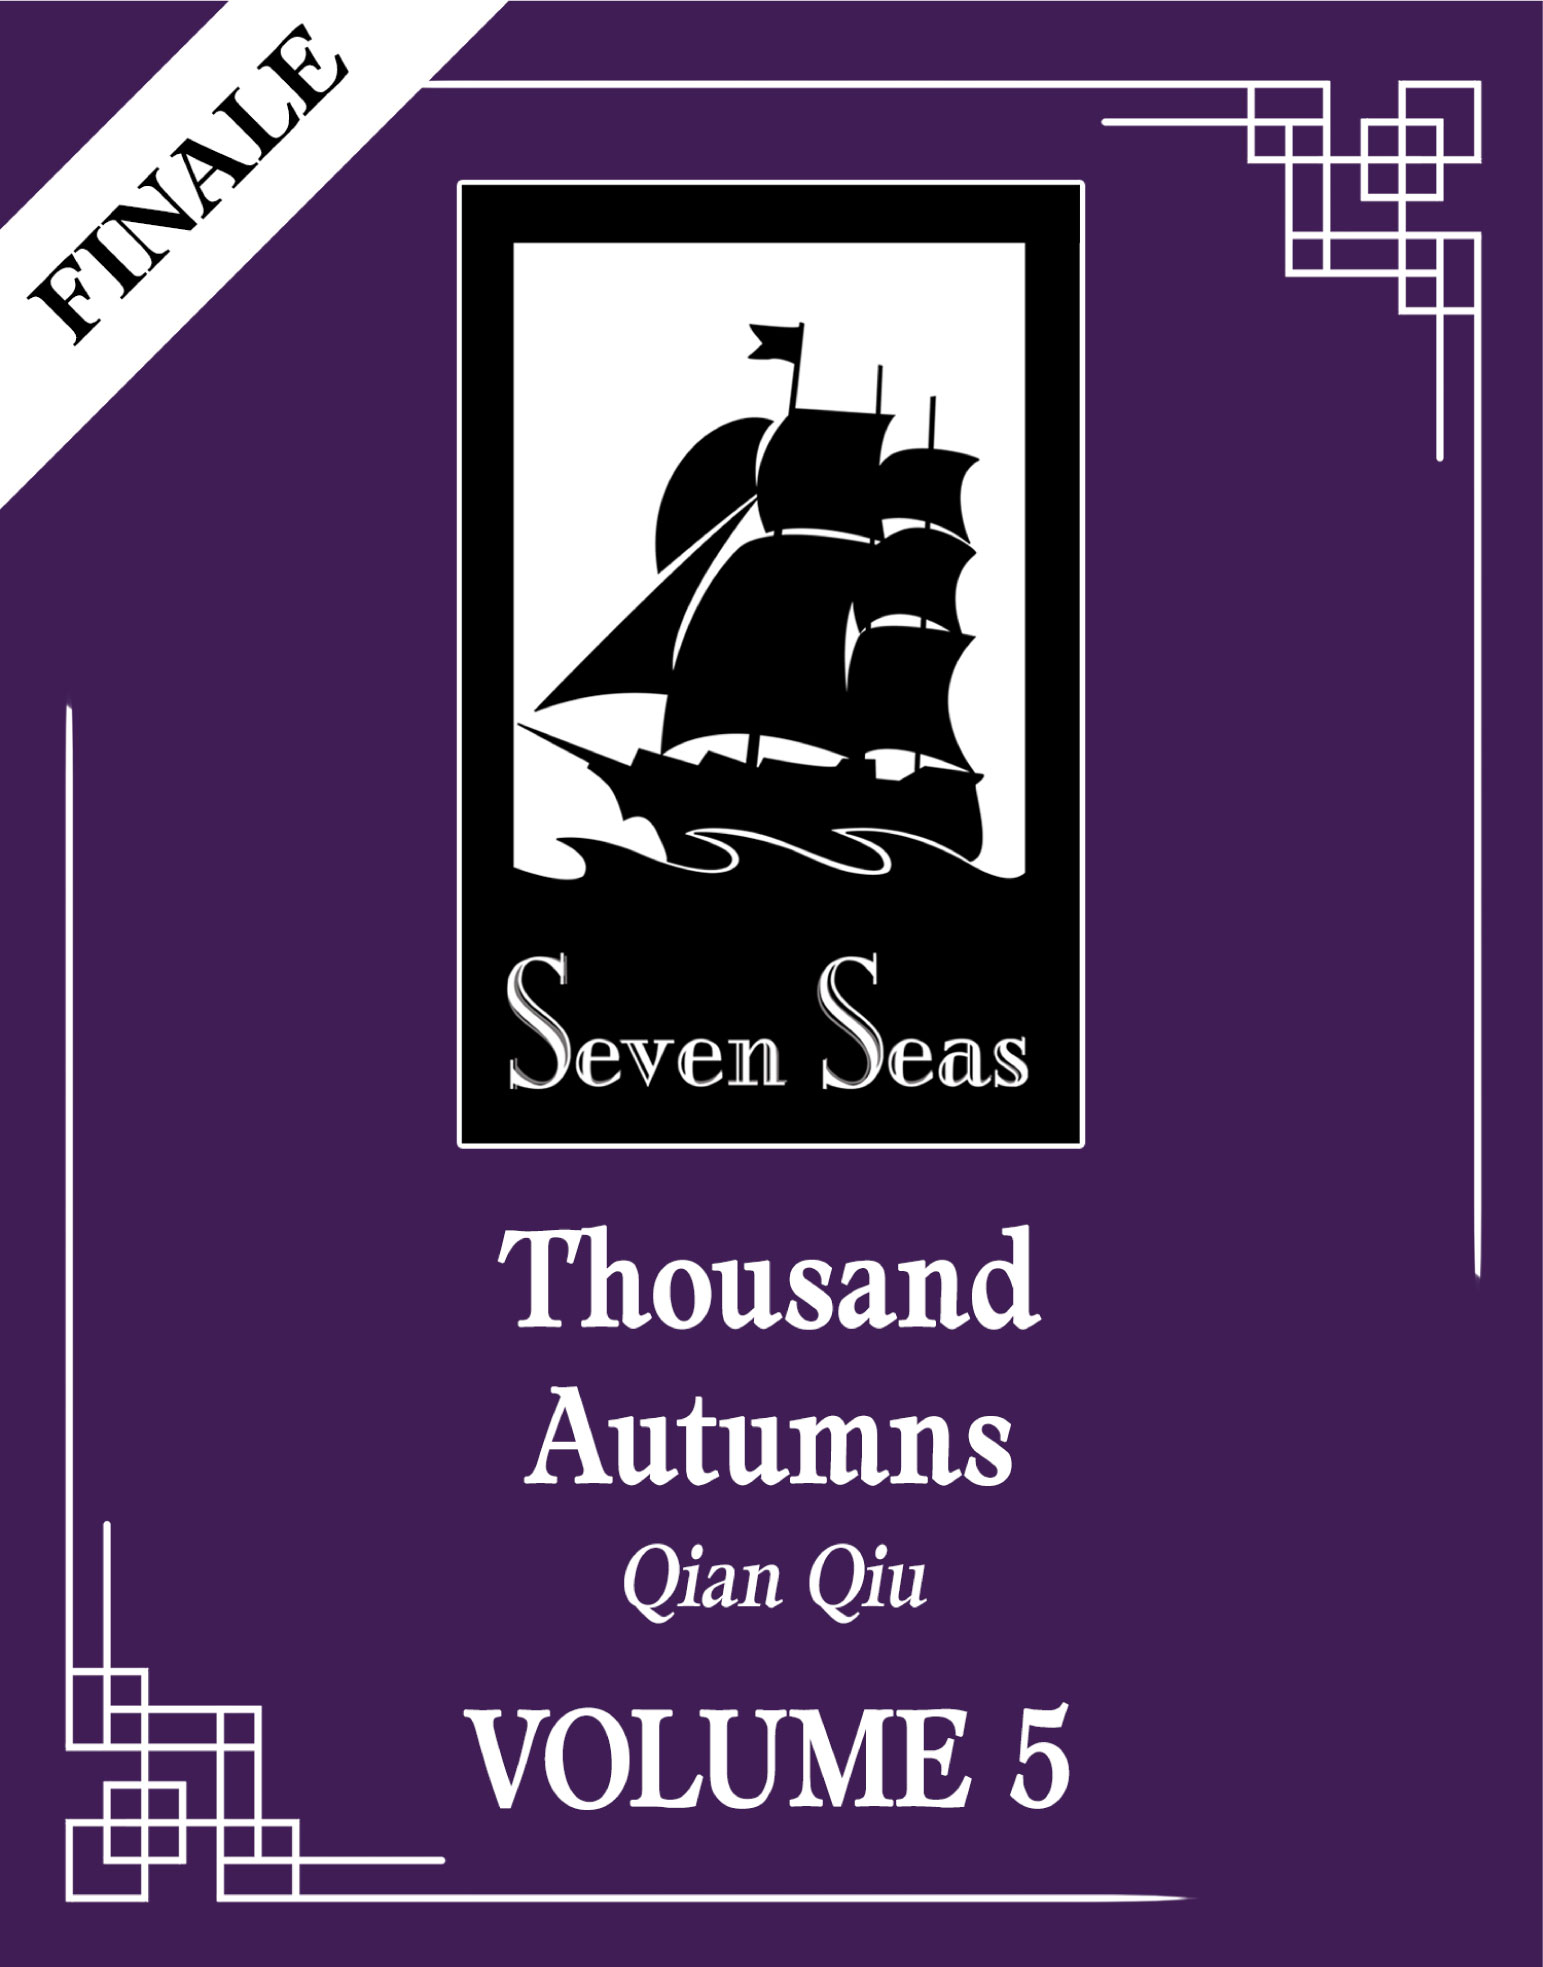 Thousand Autumns Novel Volume 5 image count 0